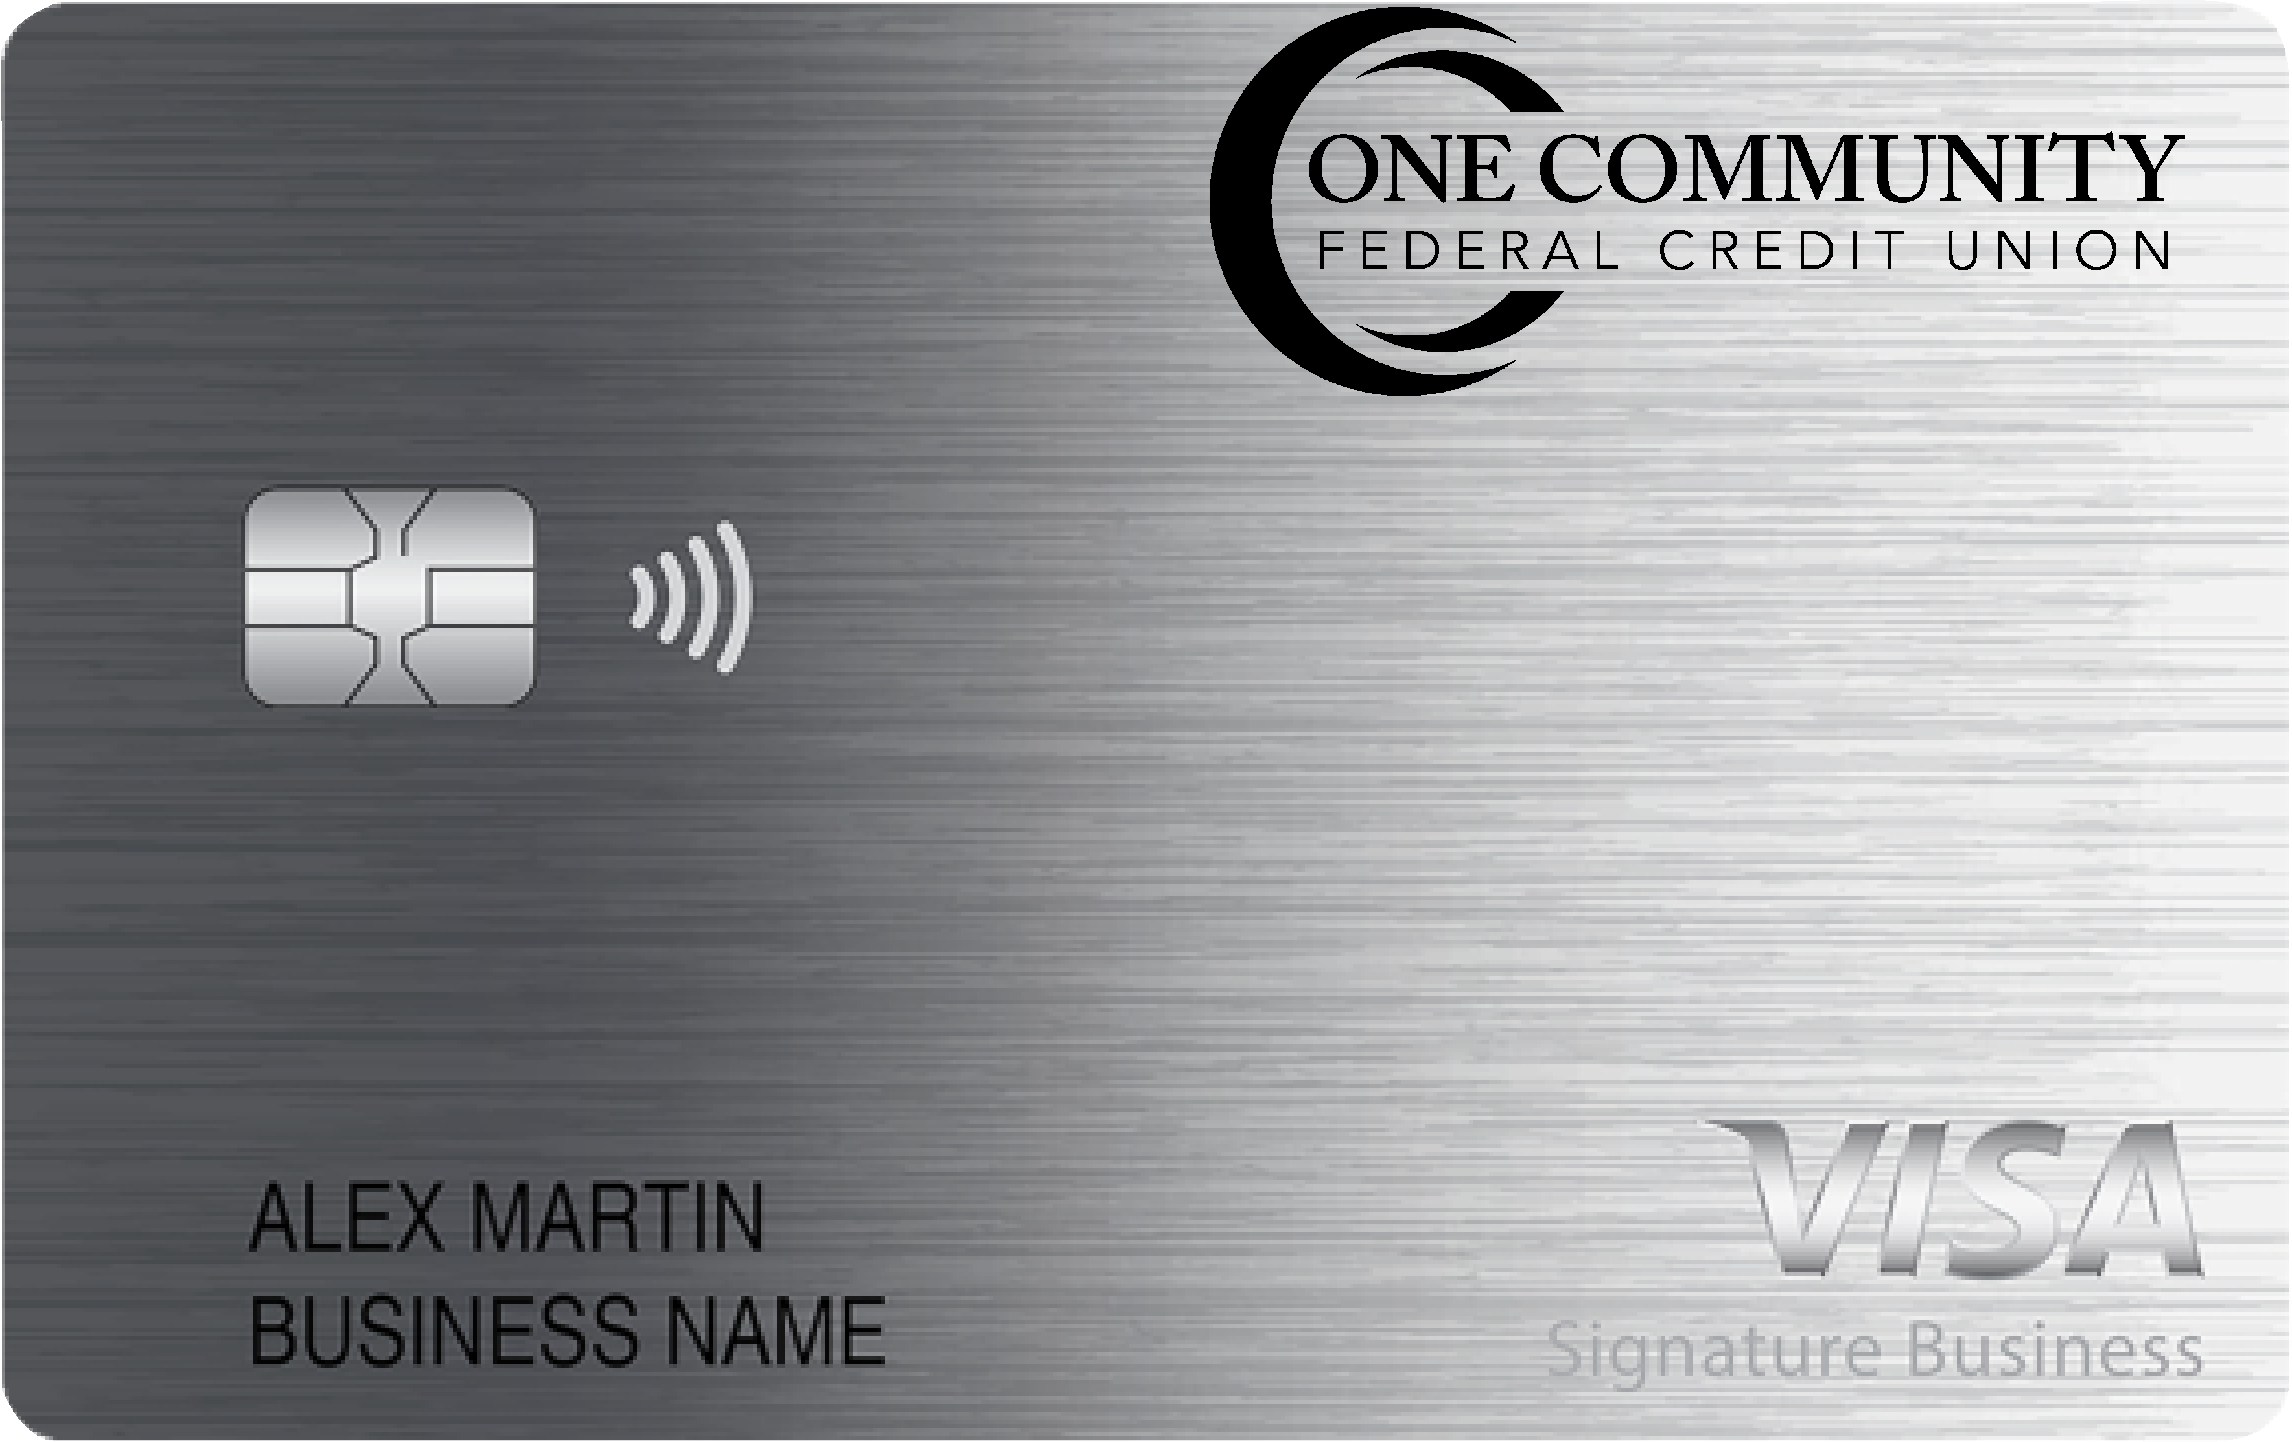 One Community Federal Credit Union Smart Business Rewards Card